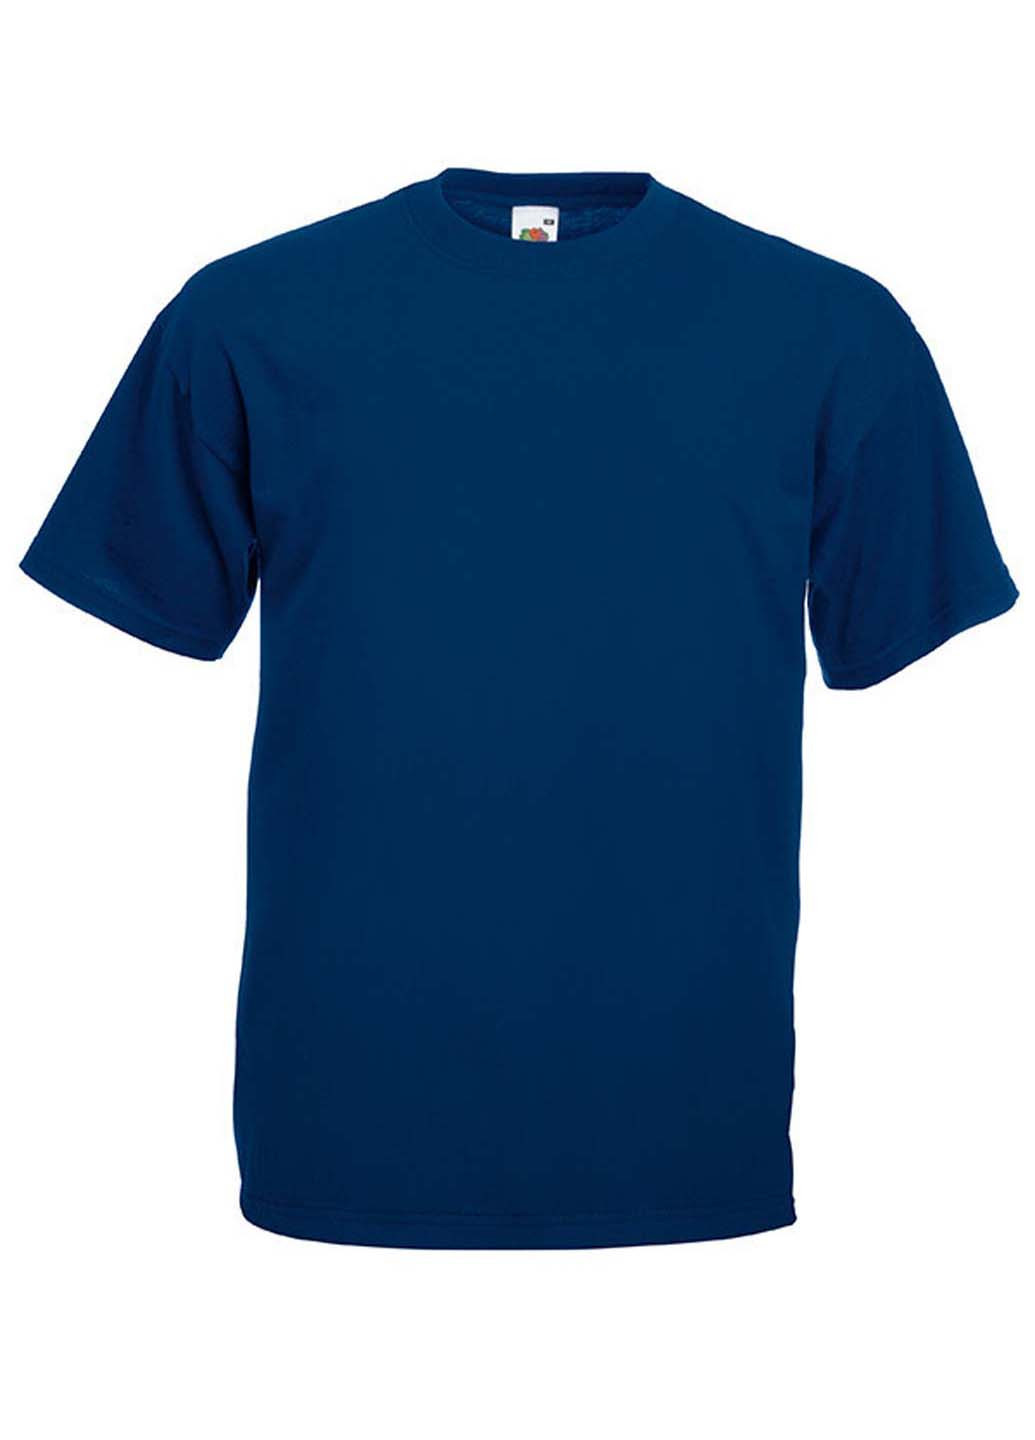 Темно-синяя футболка Fruit of the Loom ValueWeight